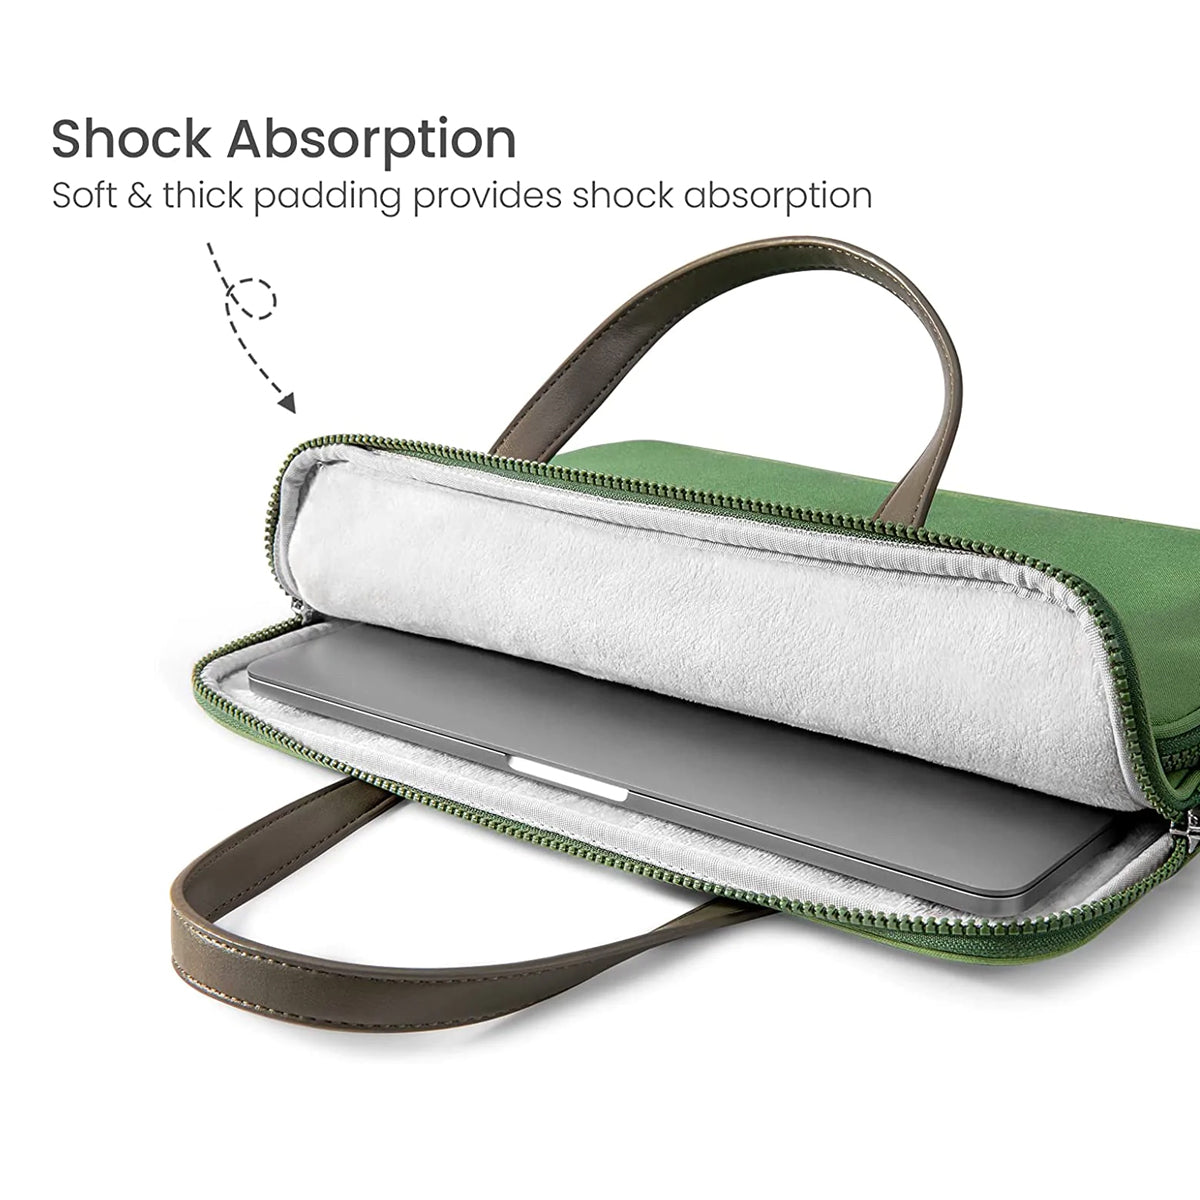 Tomtoc TheHer Laptop Shoulder Bag for MacBook Pro 12″-14″ (2016-2022)